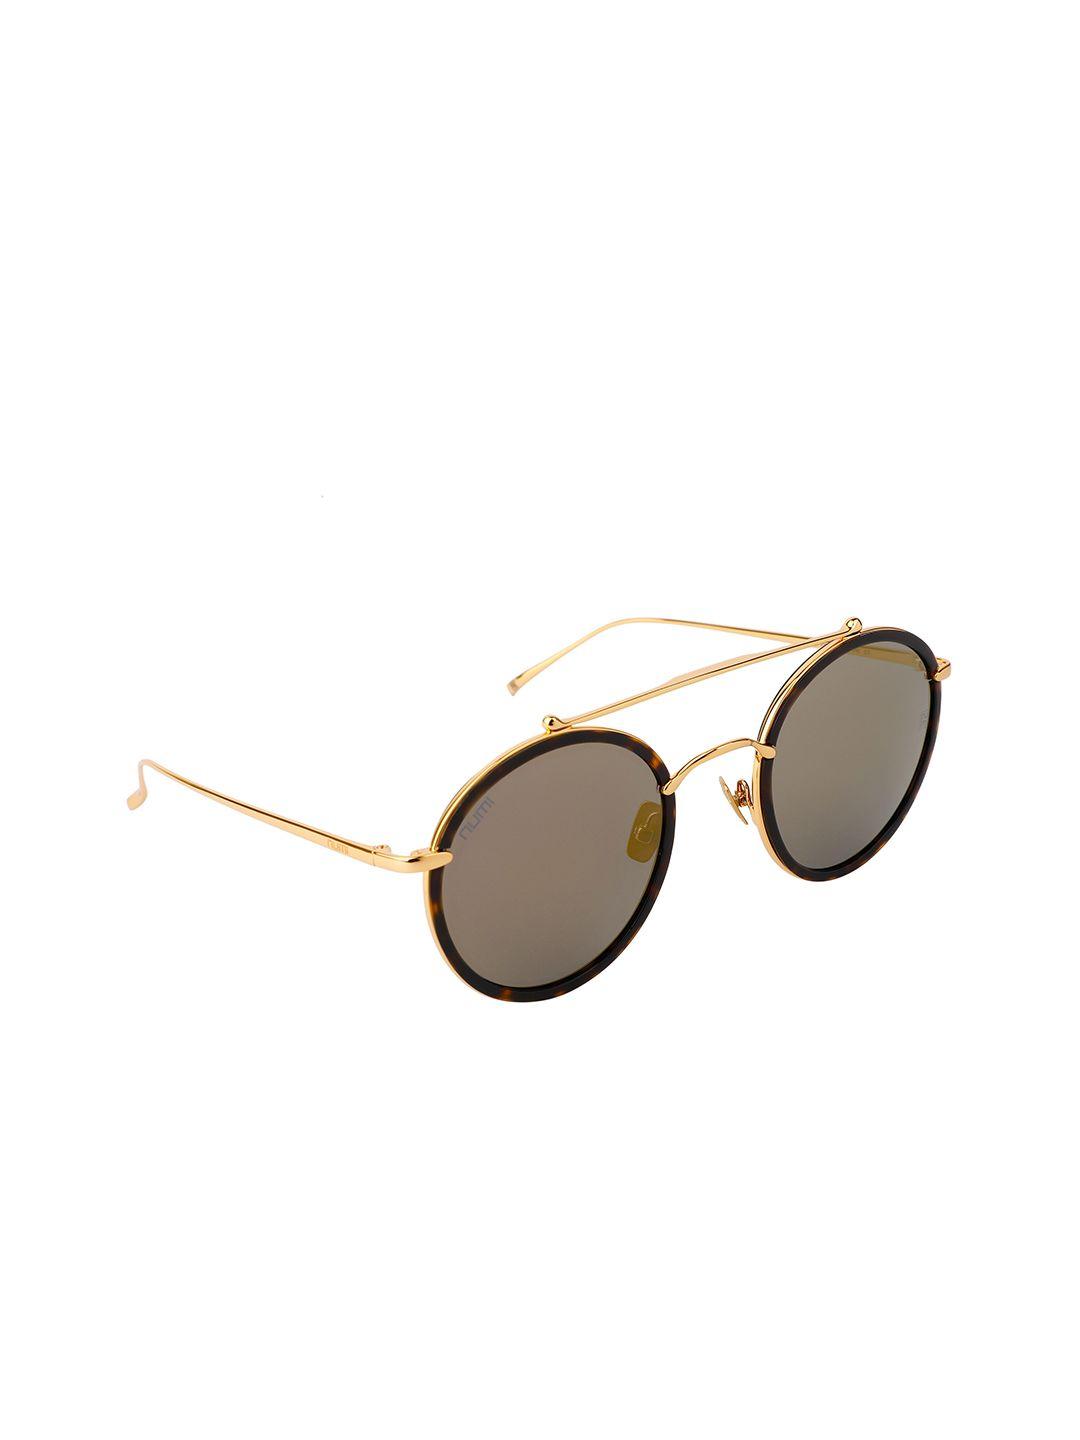 numi nouveau women gold & brown uv protected round sunglasses